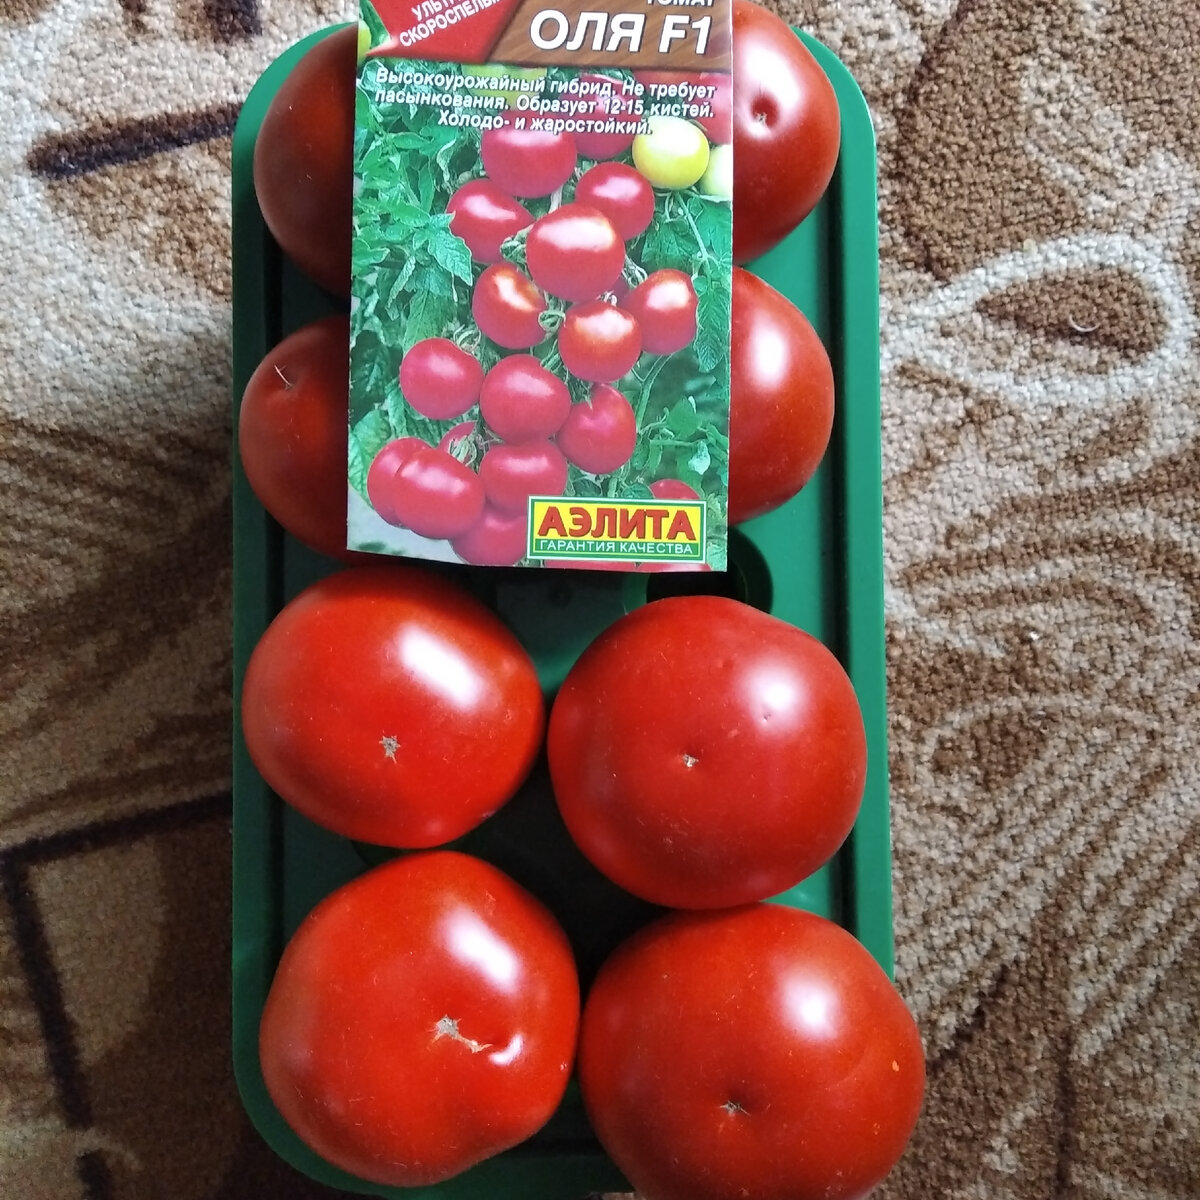 Сорт томатов оля f1 отзывы. Томат Бриксол f1. Томат Оля f1. Томат Оля f1 отзывы.